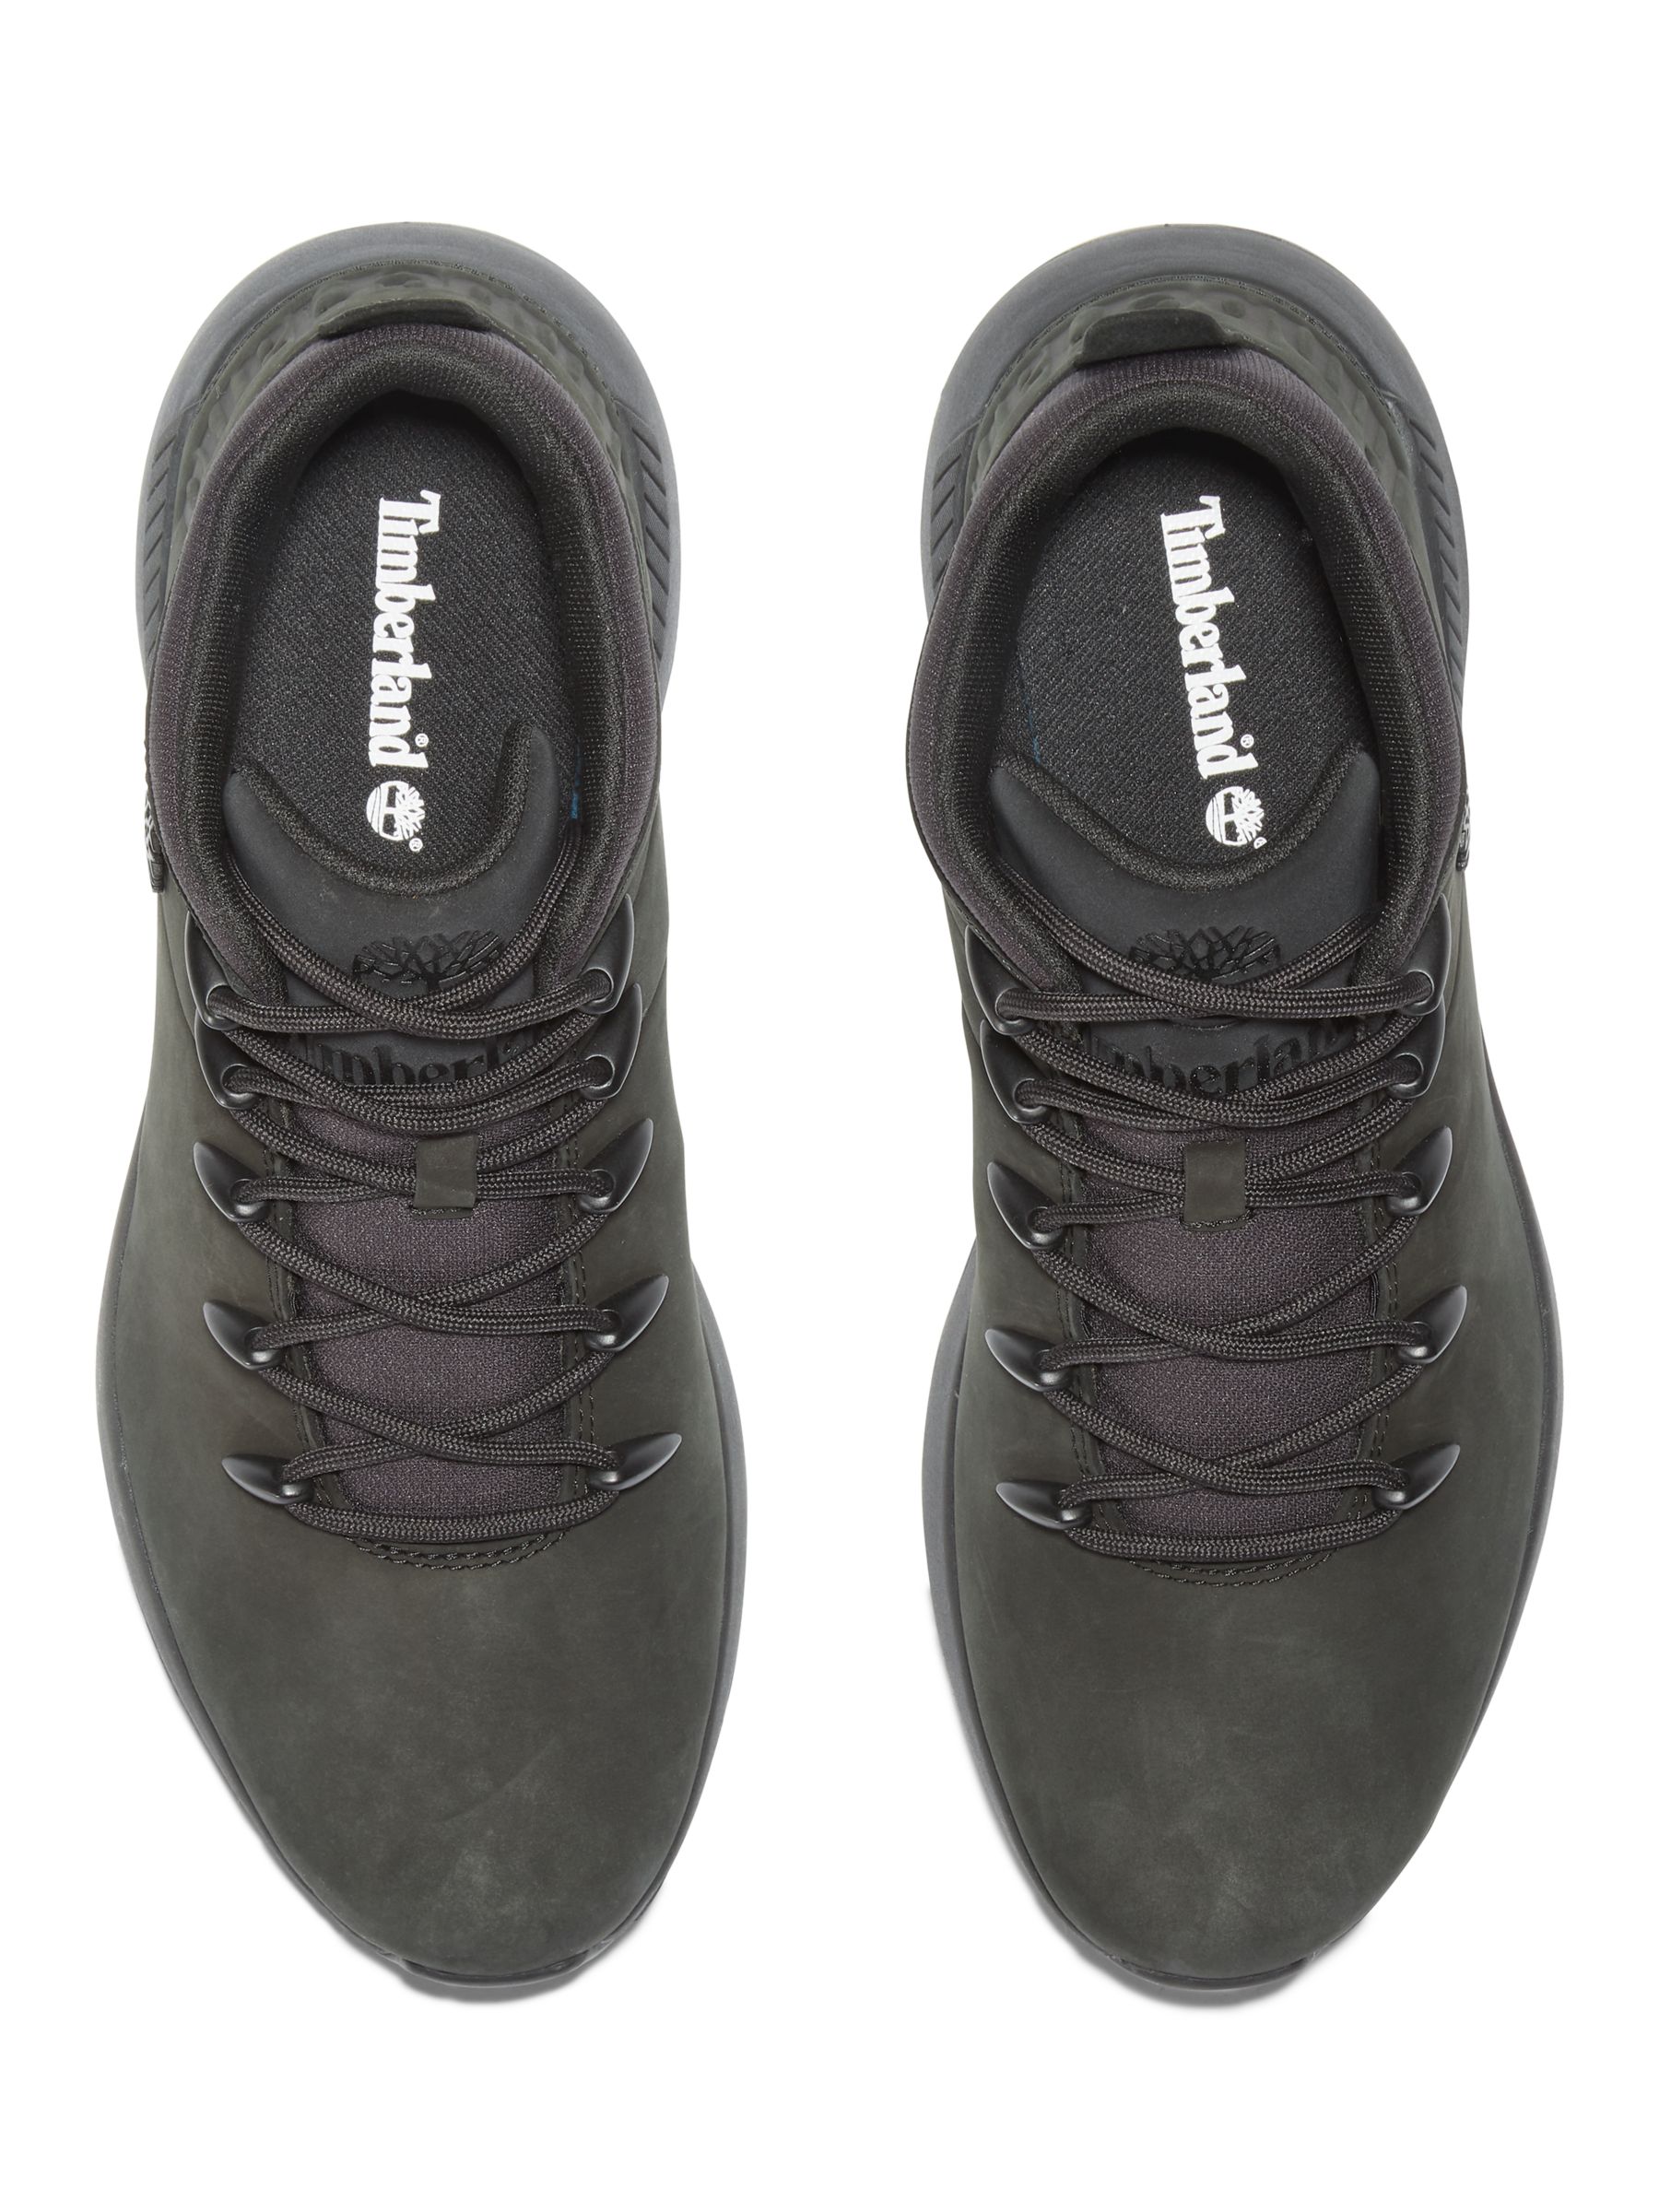 Buy Timberland Sprint Trekker Leather Boots, Black Online at johnlewis.com